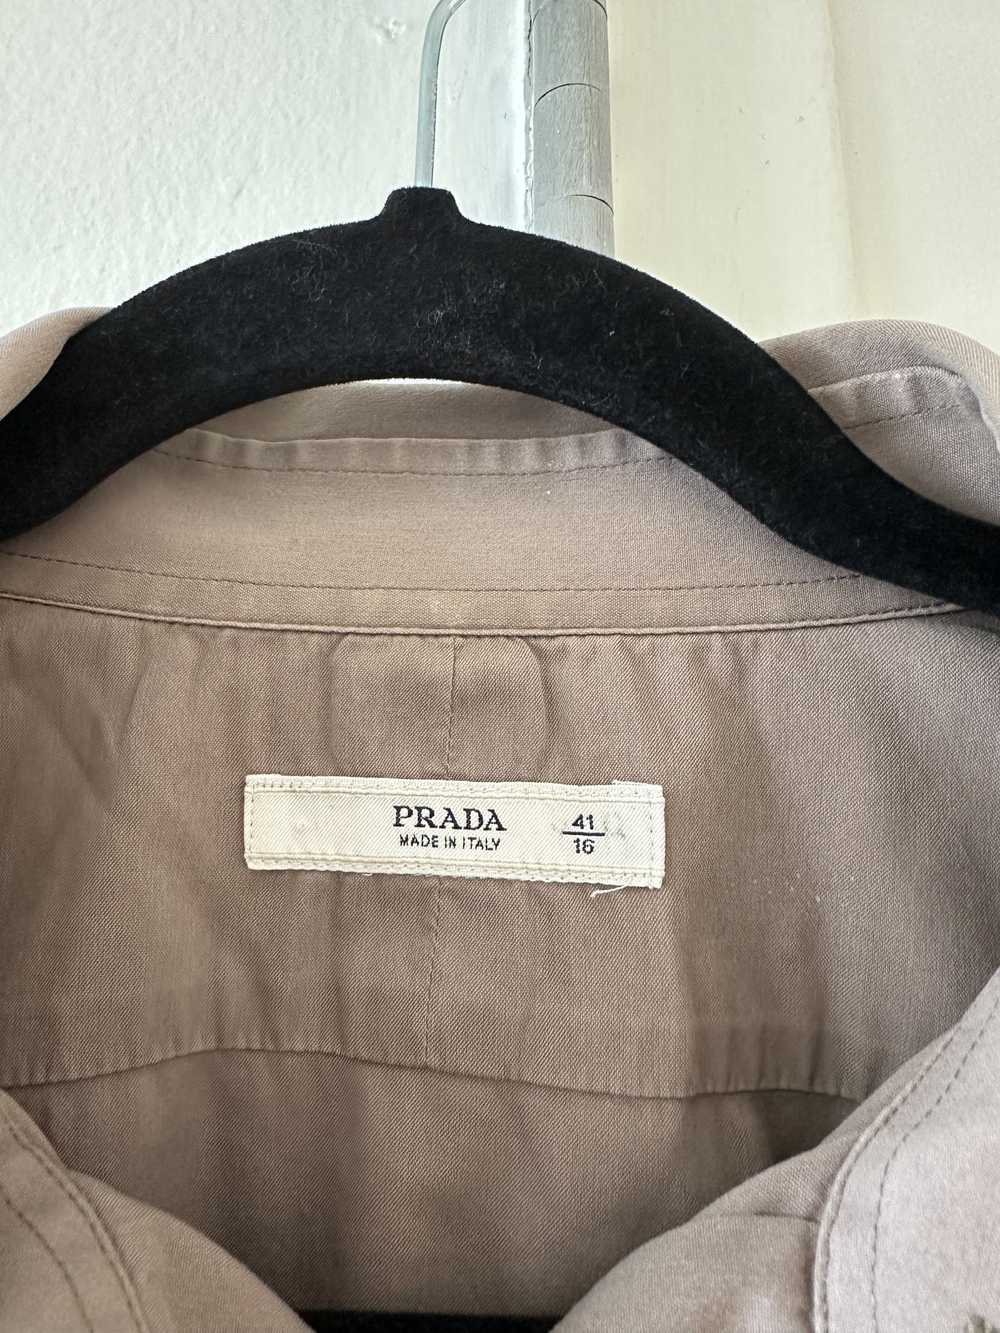 Prada Prada Short Sleeve Button Up Shirt - image 3